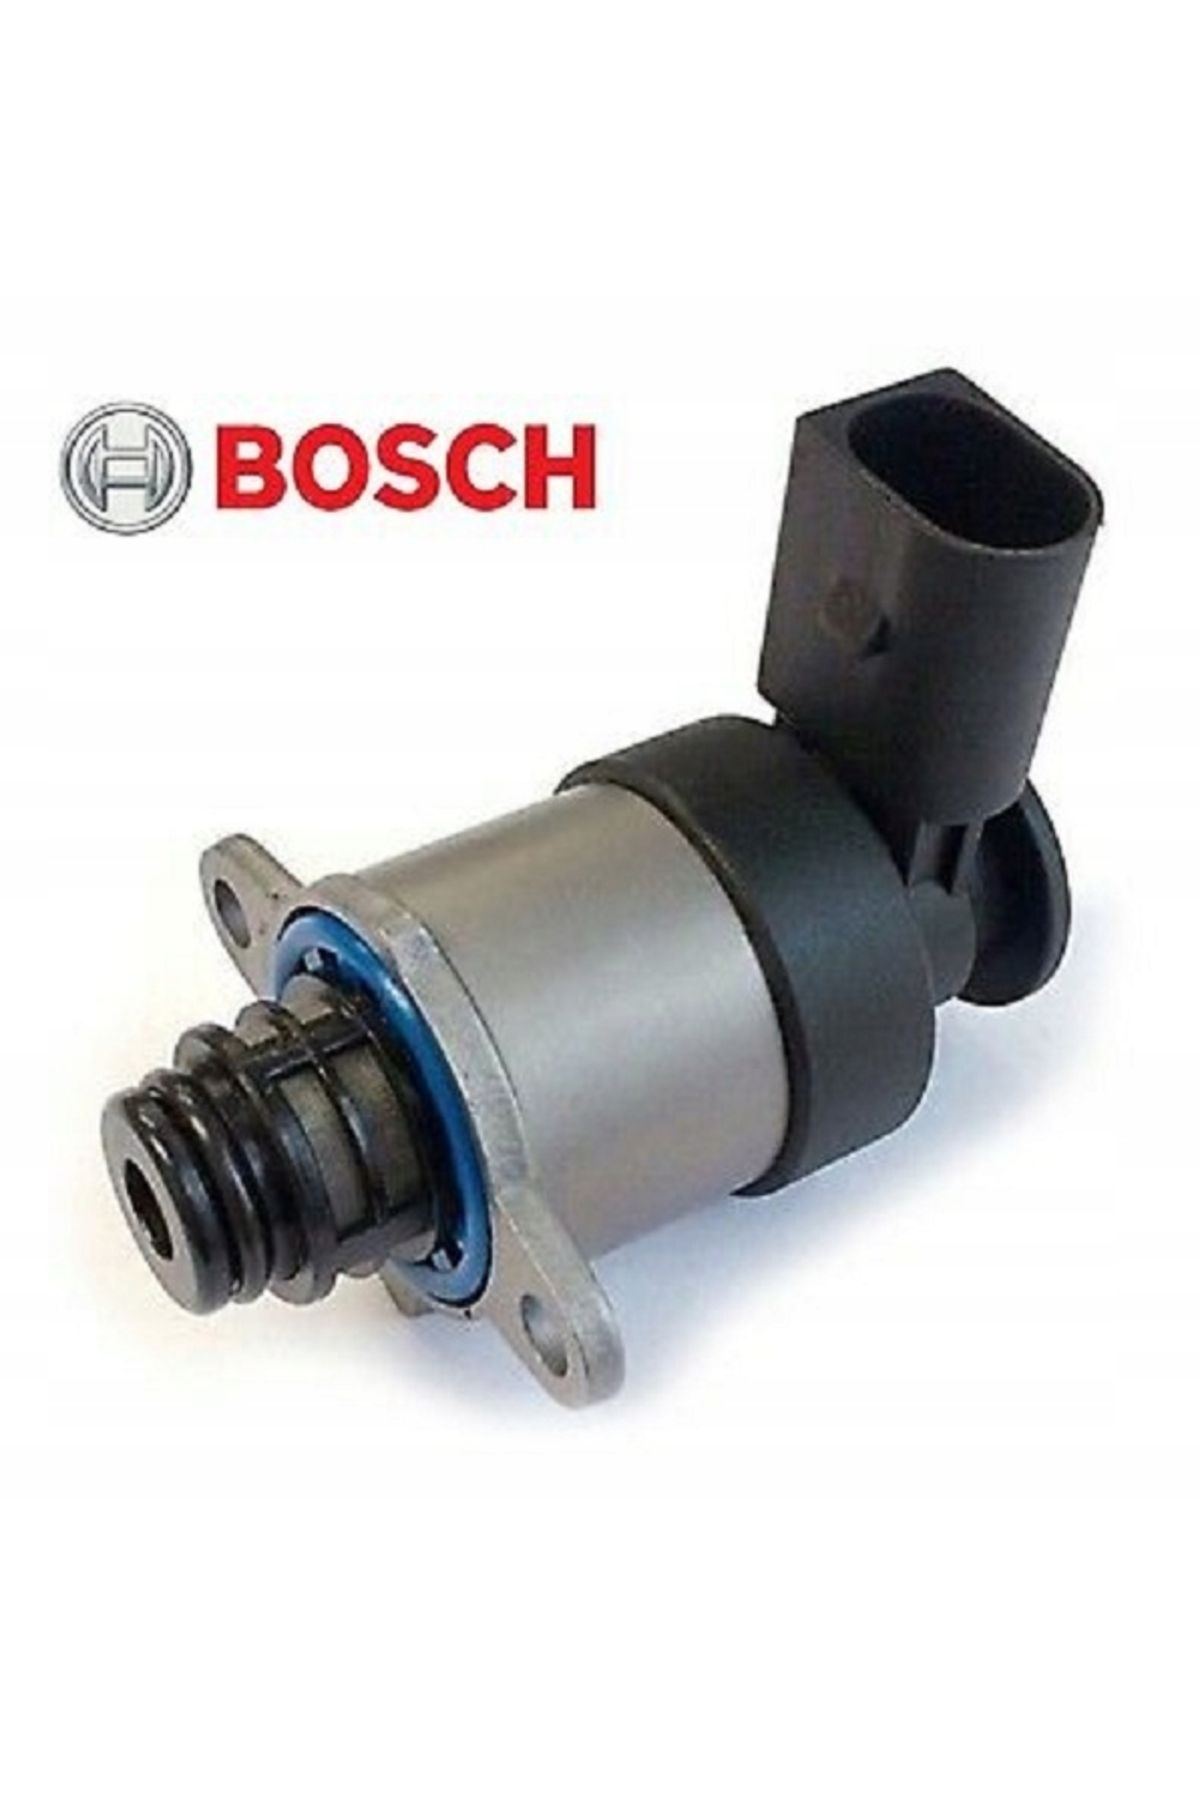 Bosch YAKIT KONTROL VALFI BMW B47 B37 F10 20 30 F55 F56 F60 G30 13518574787 Uyumlu